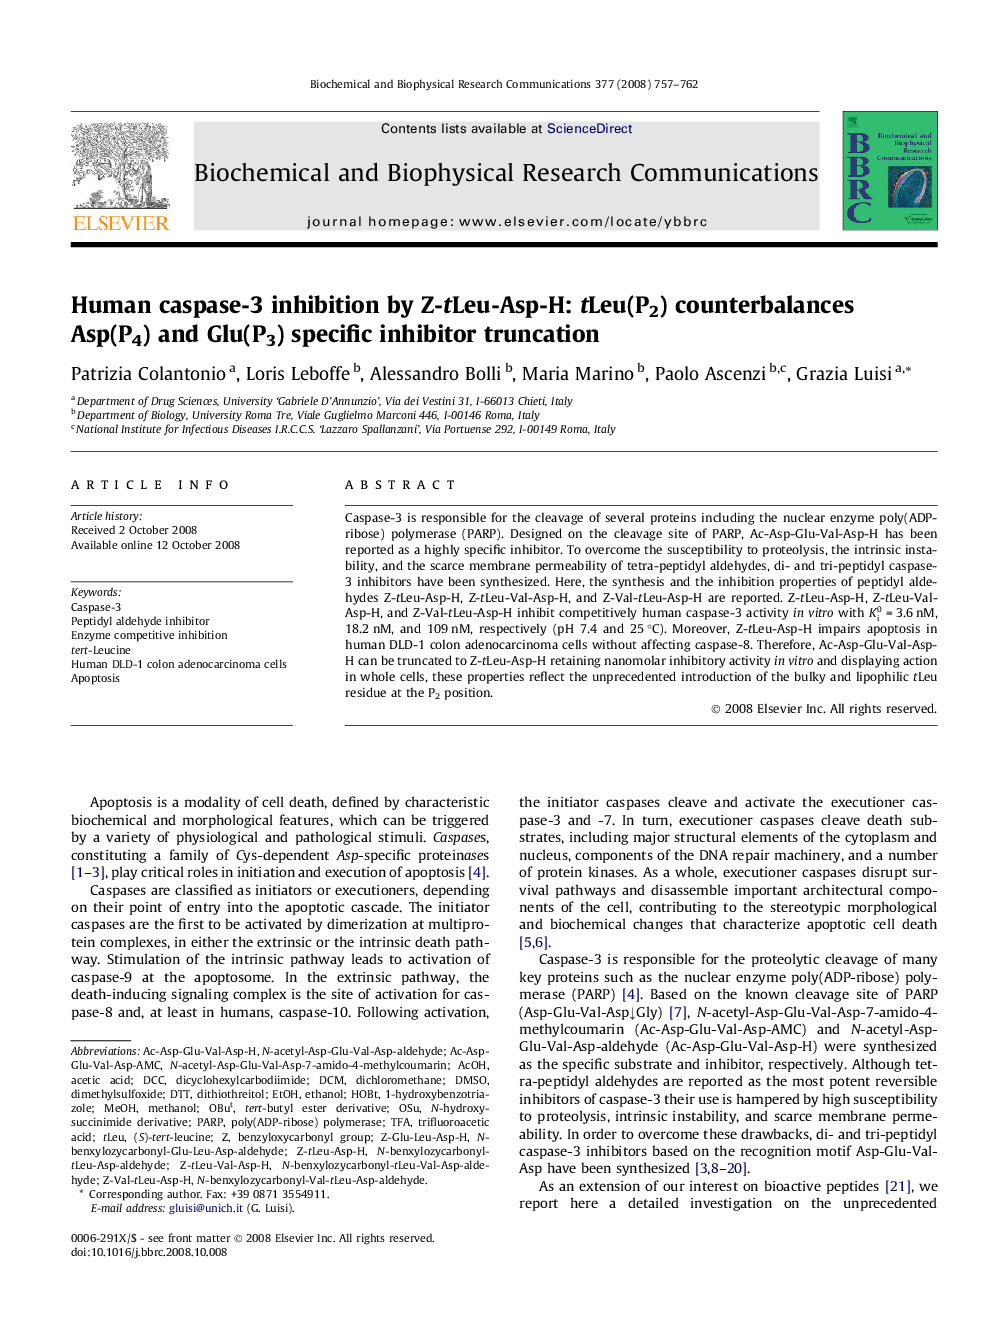 Human caspase-3 inhibition by Z-tLeu-Asp-H: tLeu(P2) counterbalances Asp(P4) and Glu(P3) specific inhibitor truncation